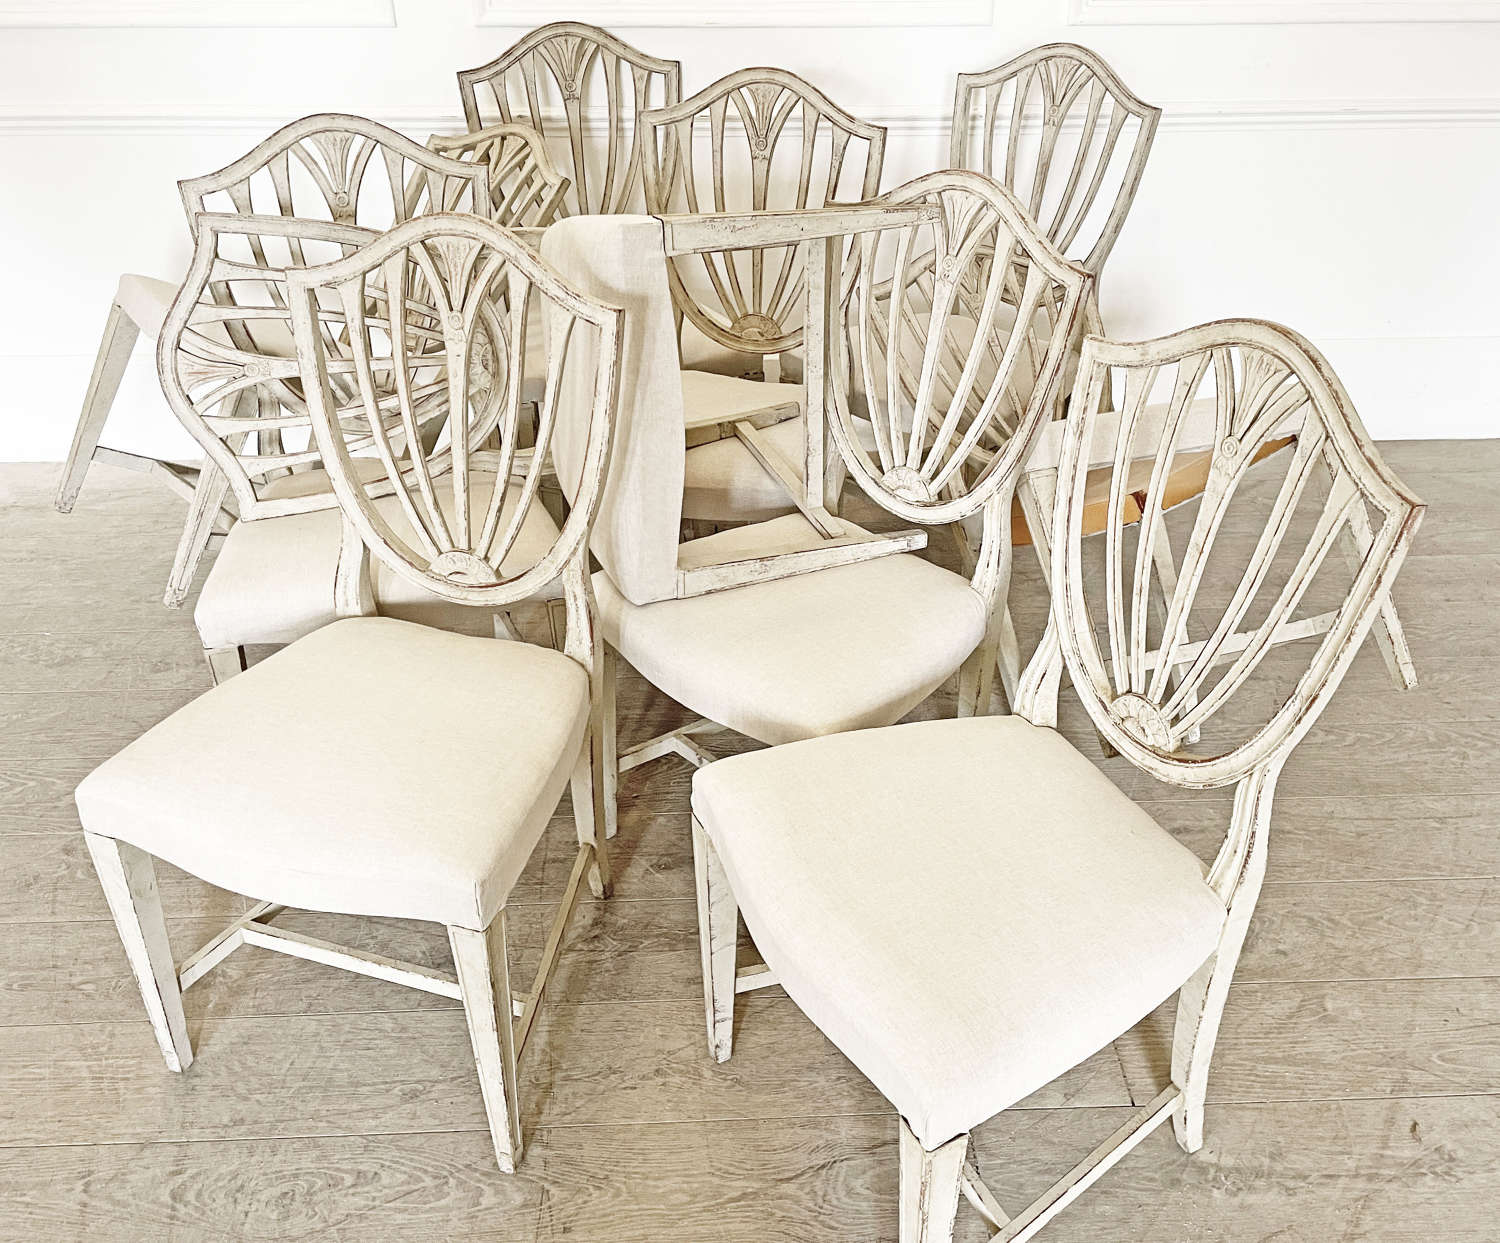 Set of Ten 19th Century Swedish Dining Chairs - circa 1860